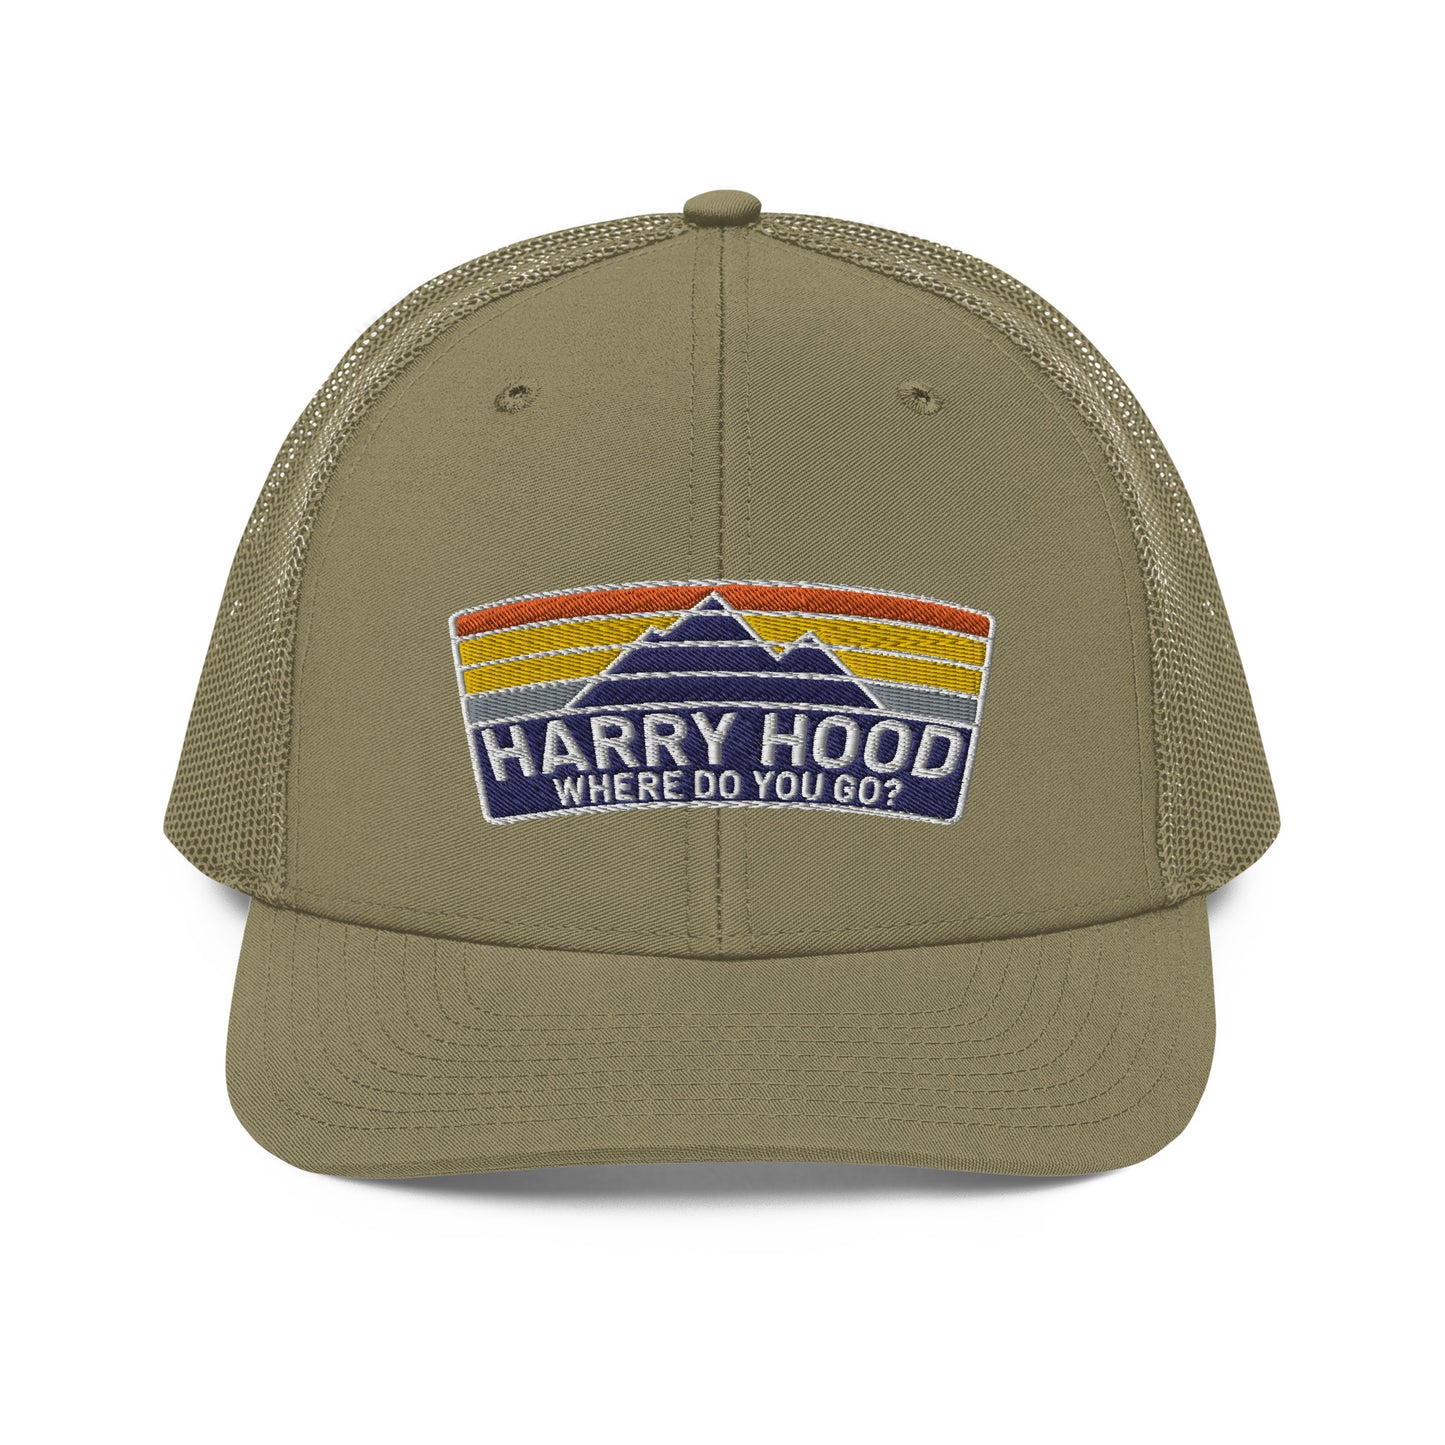 Harry Hood Embroidery 112 Snapback Cap